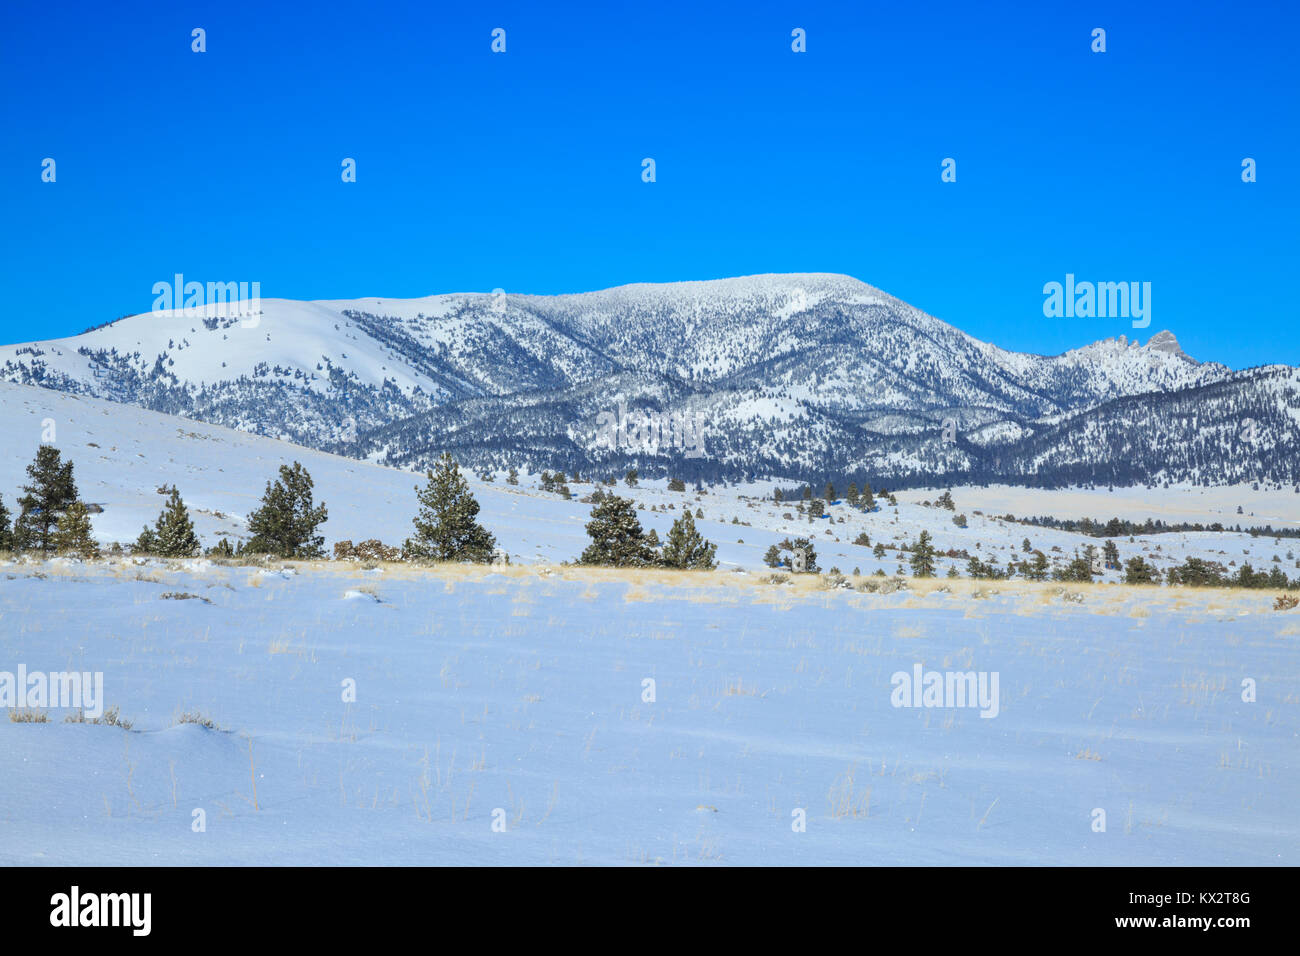 https://c8.alamy.com/comp/KX2T8G/sleeping-giant-mountain-in-winter-near-helena-montana-KX2T8G.jpg